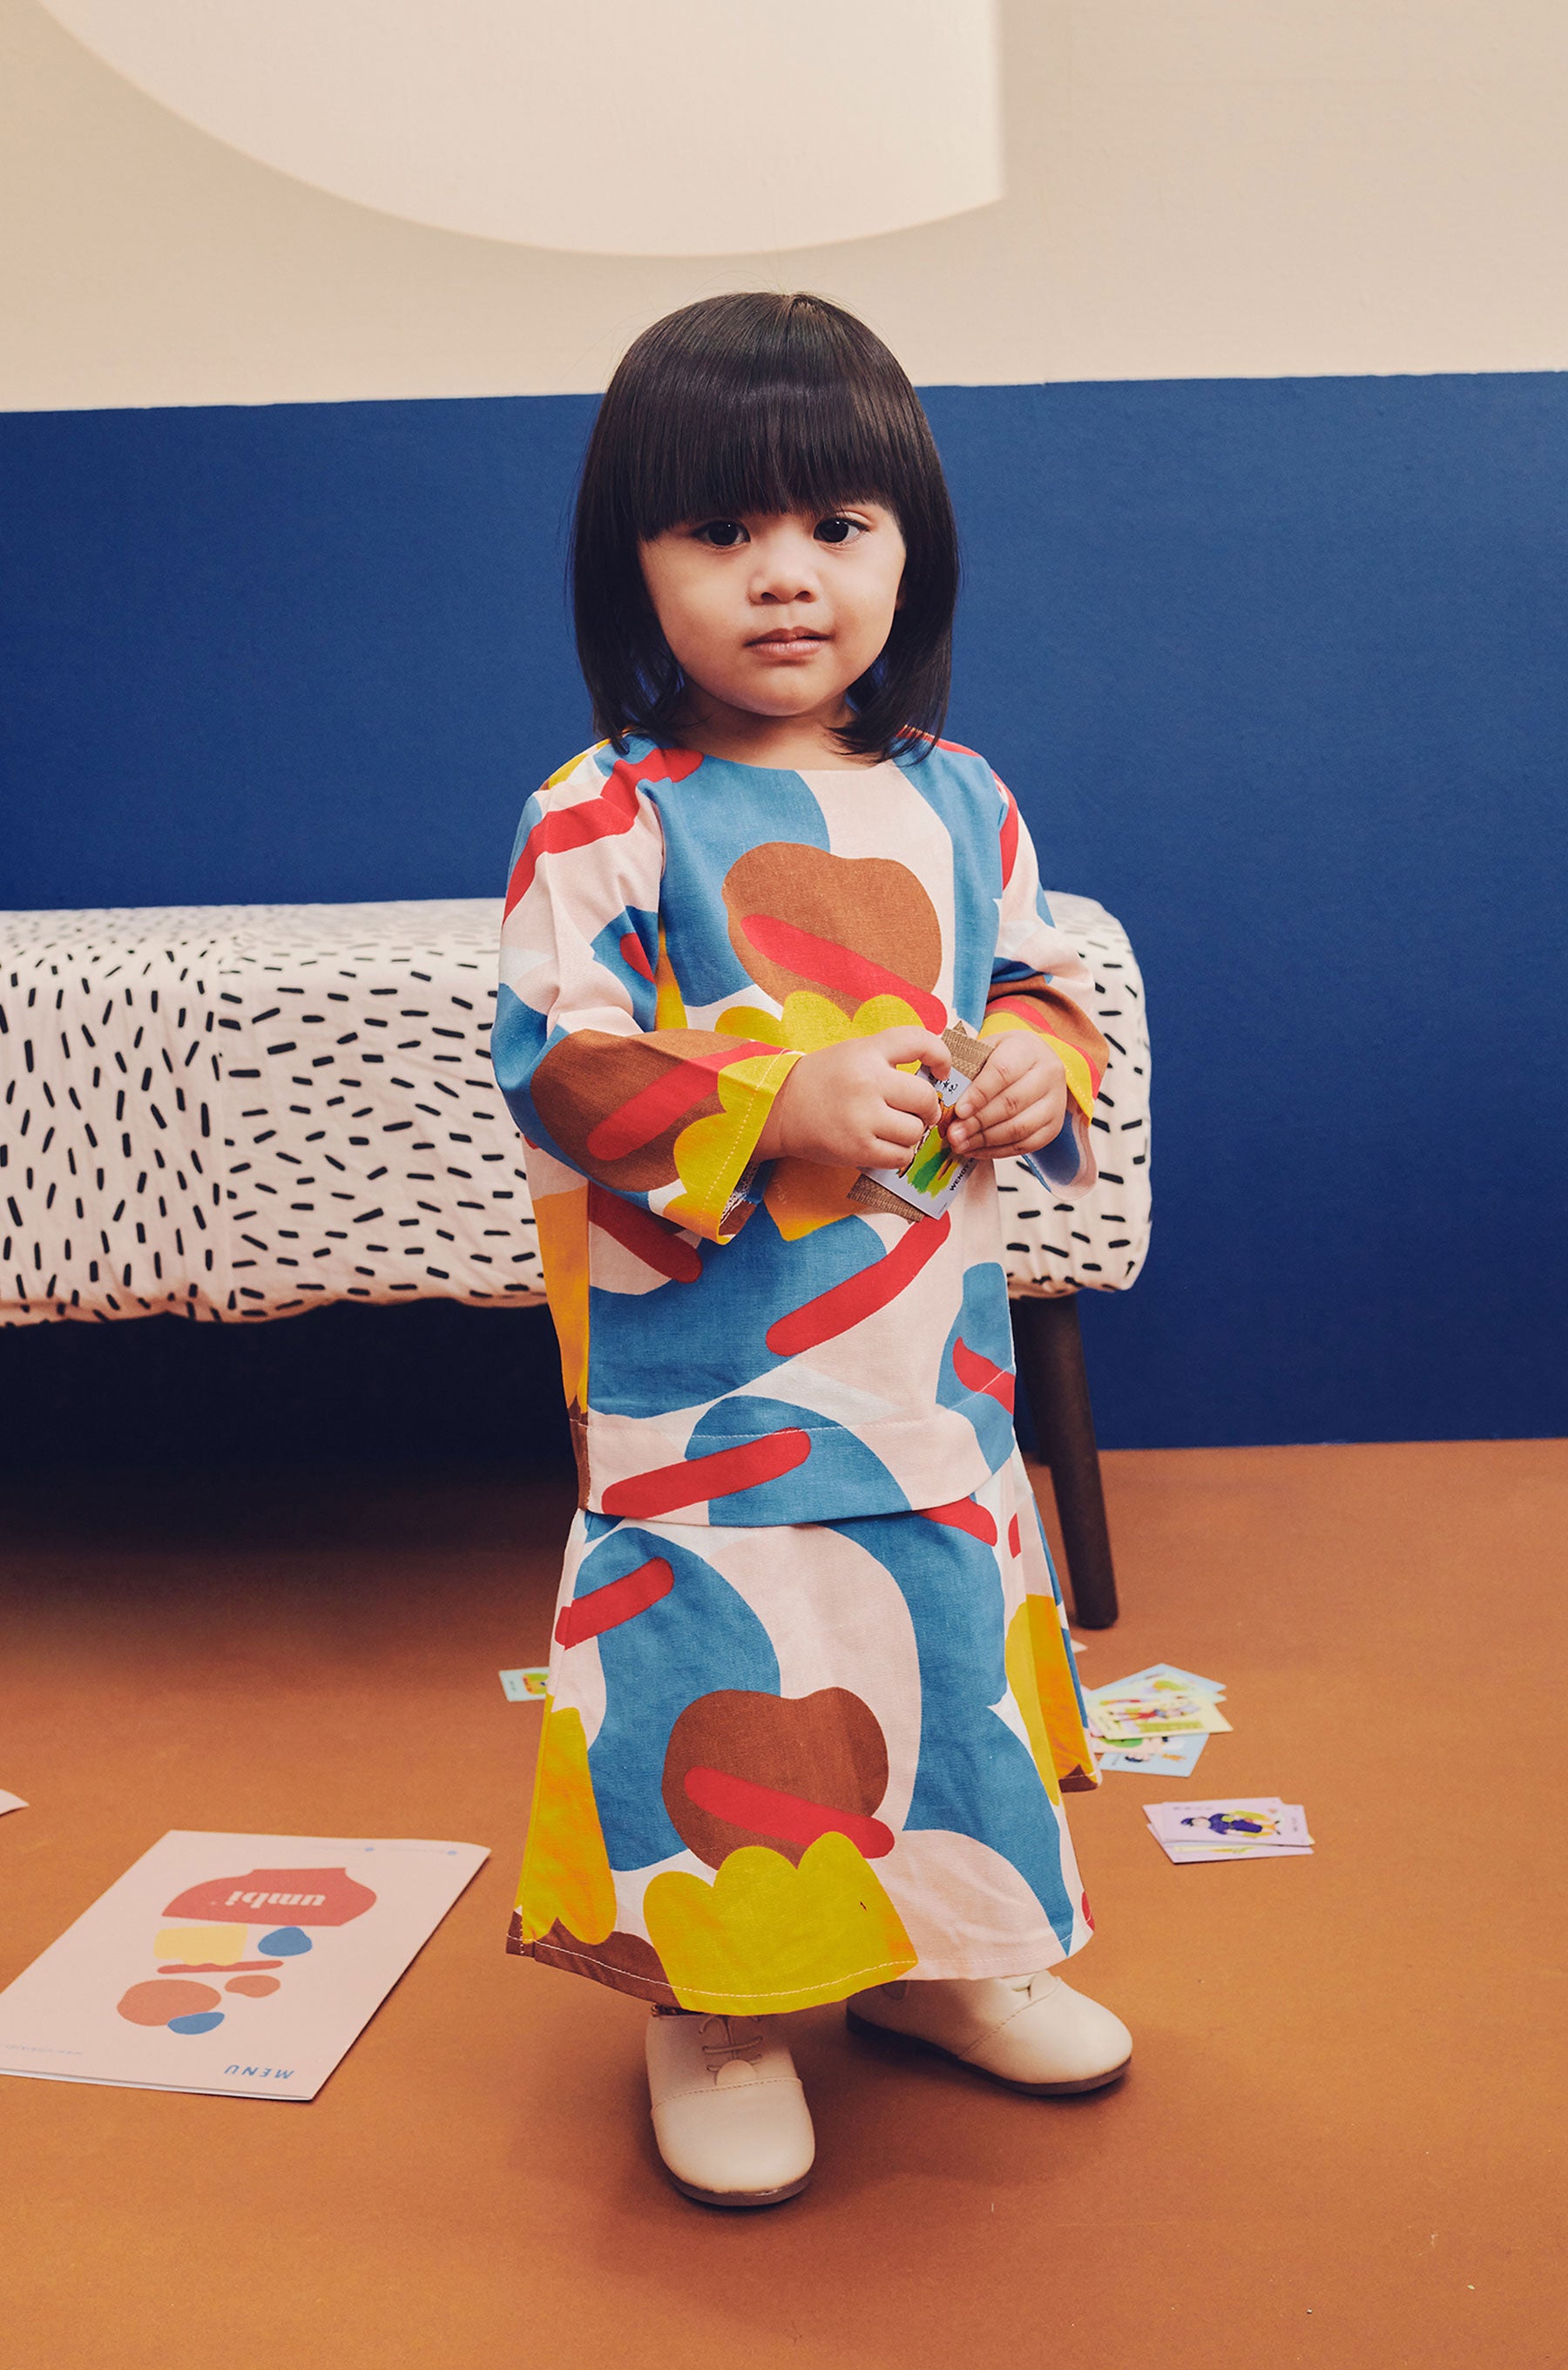 baju raya family sedondon baby kurung dress jellybean print